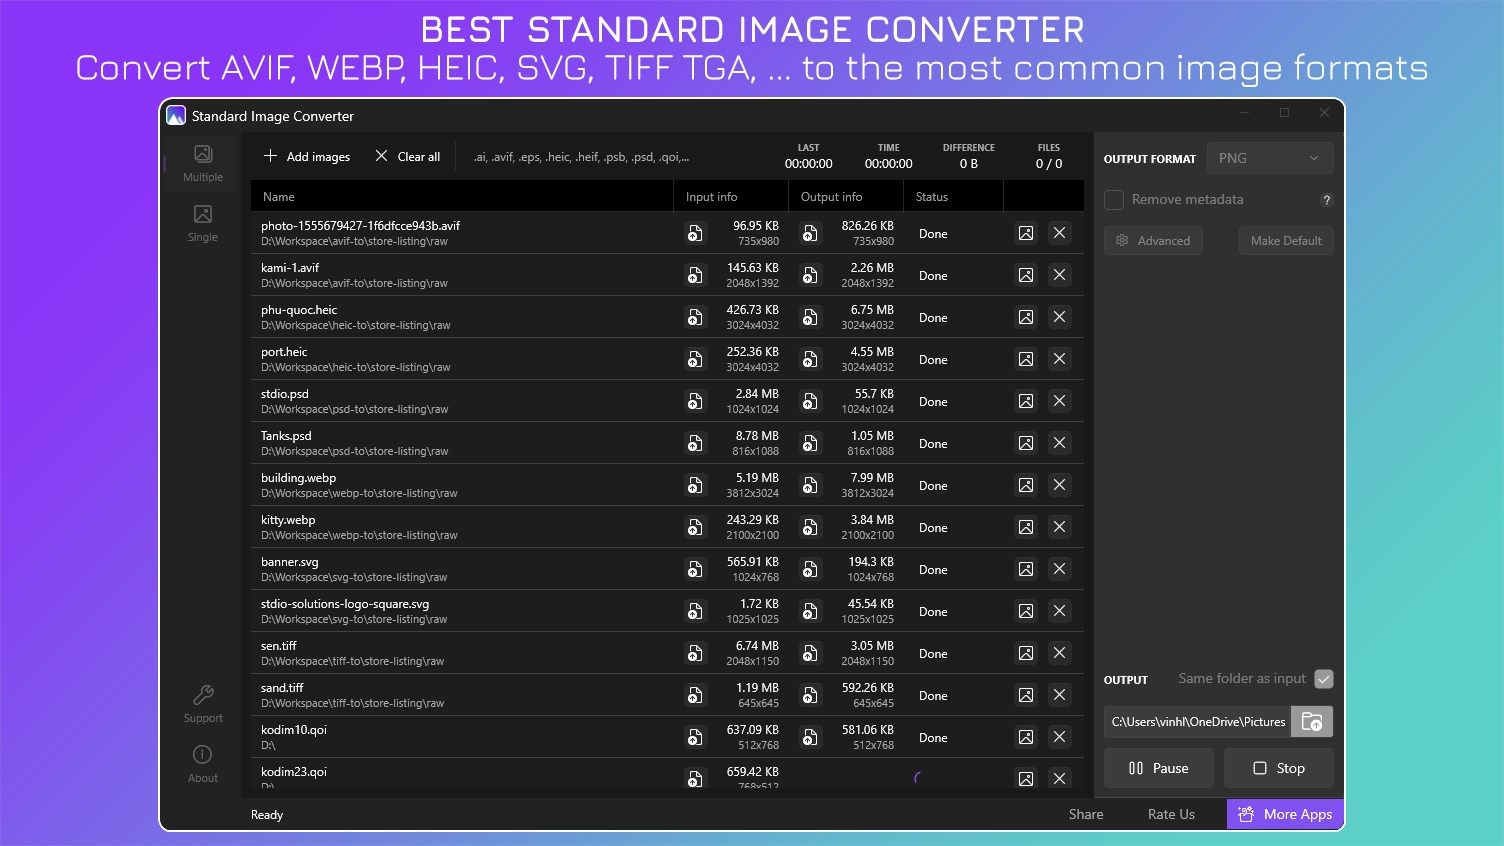 Standard Image Converter